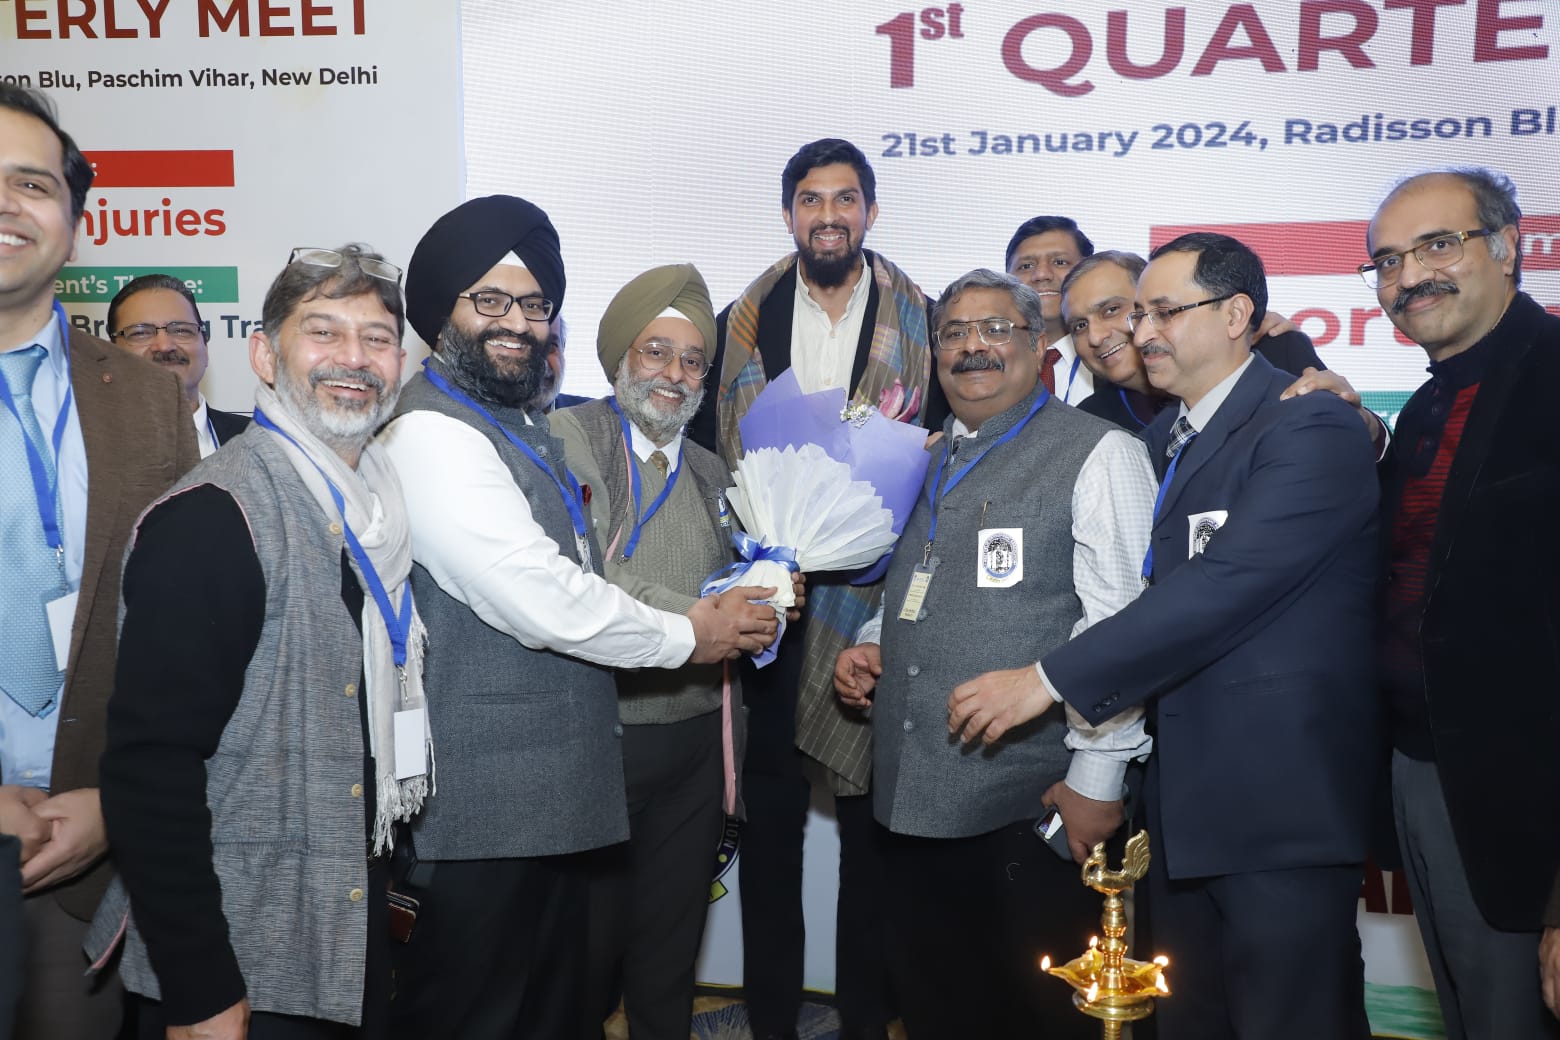 Delhi Orthopaedic Association on Sports Injuries held successful inaugural quarterly meet